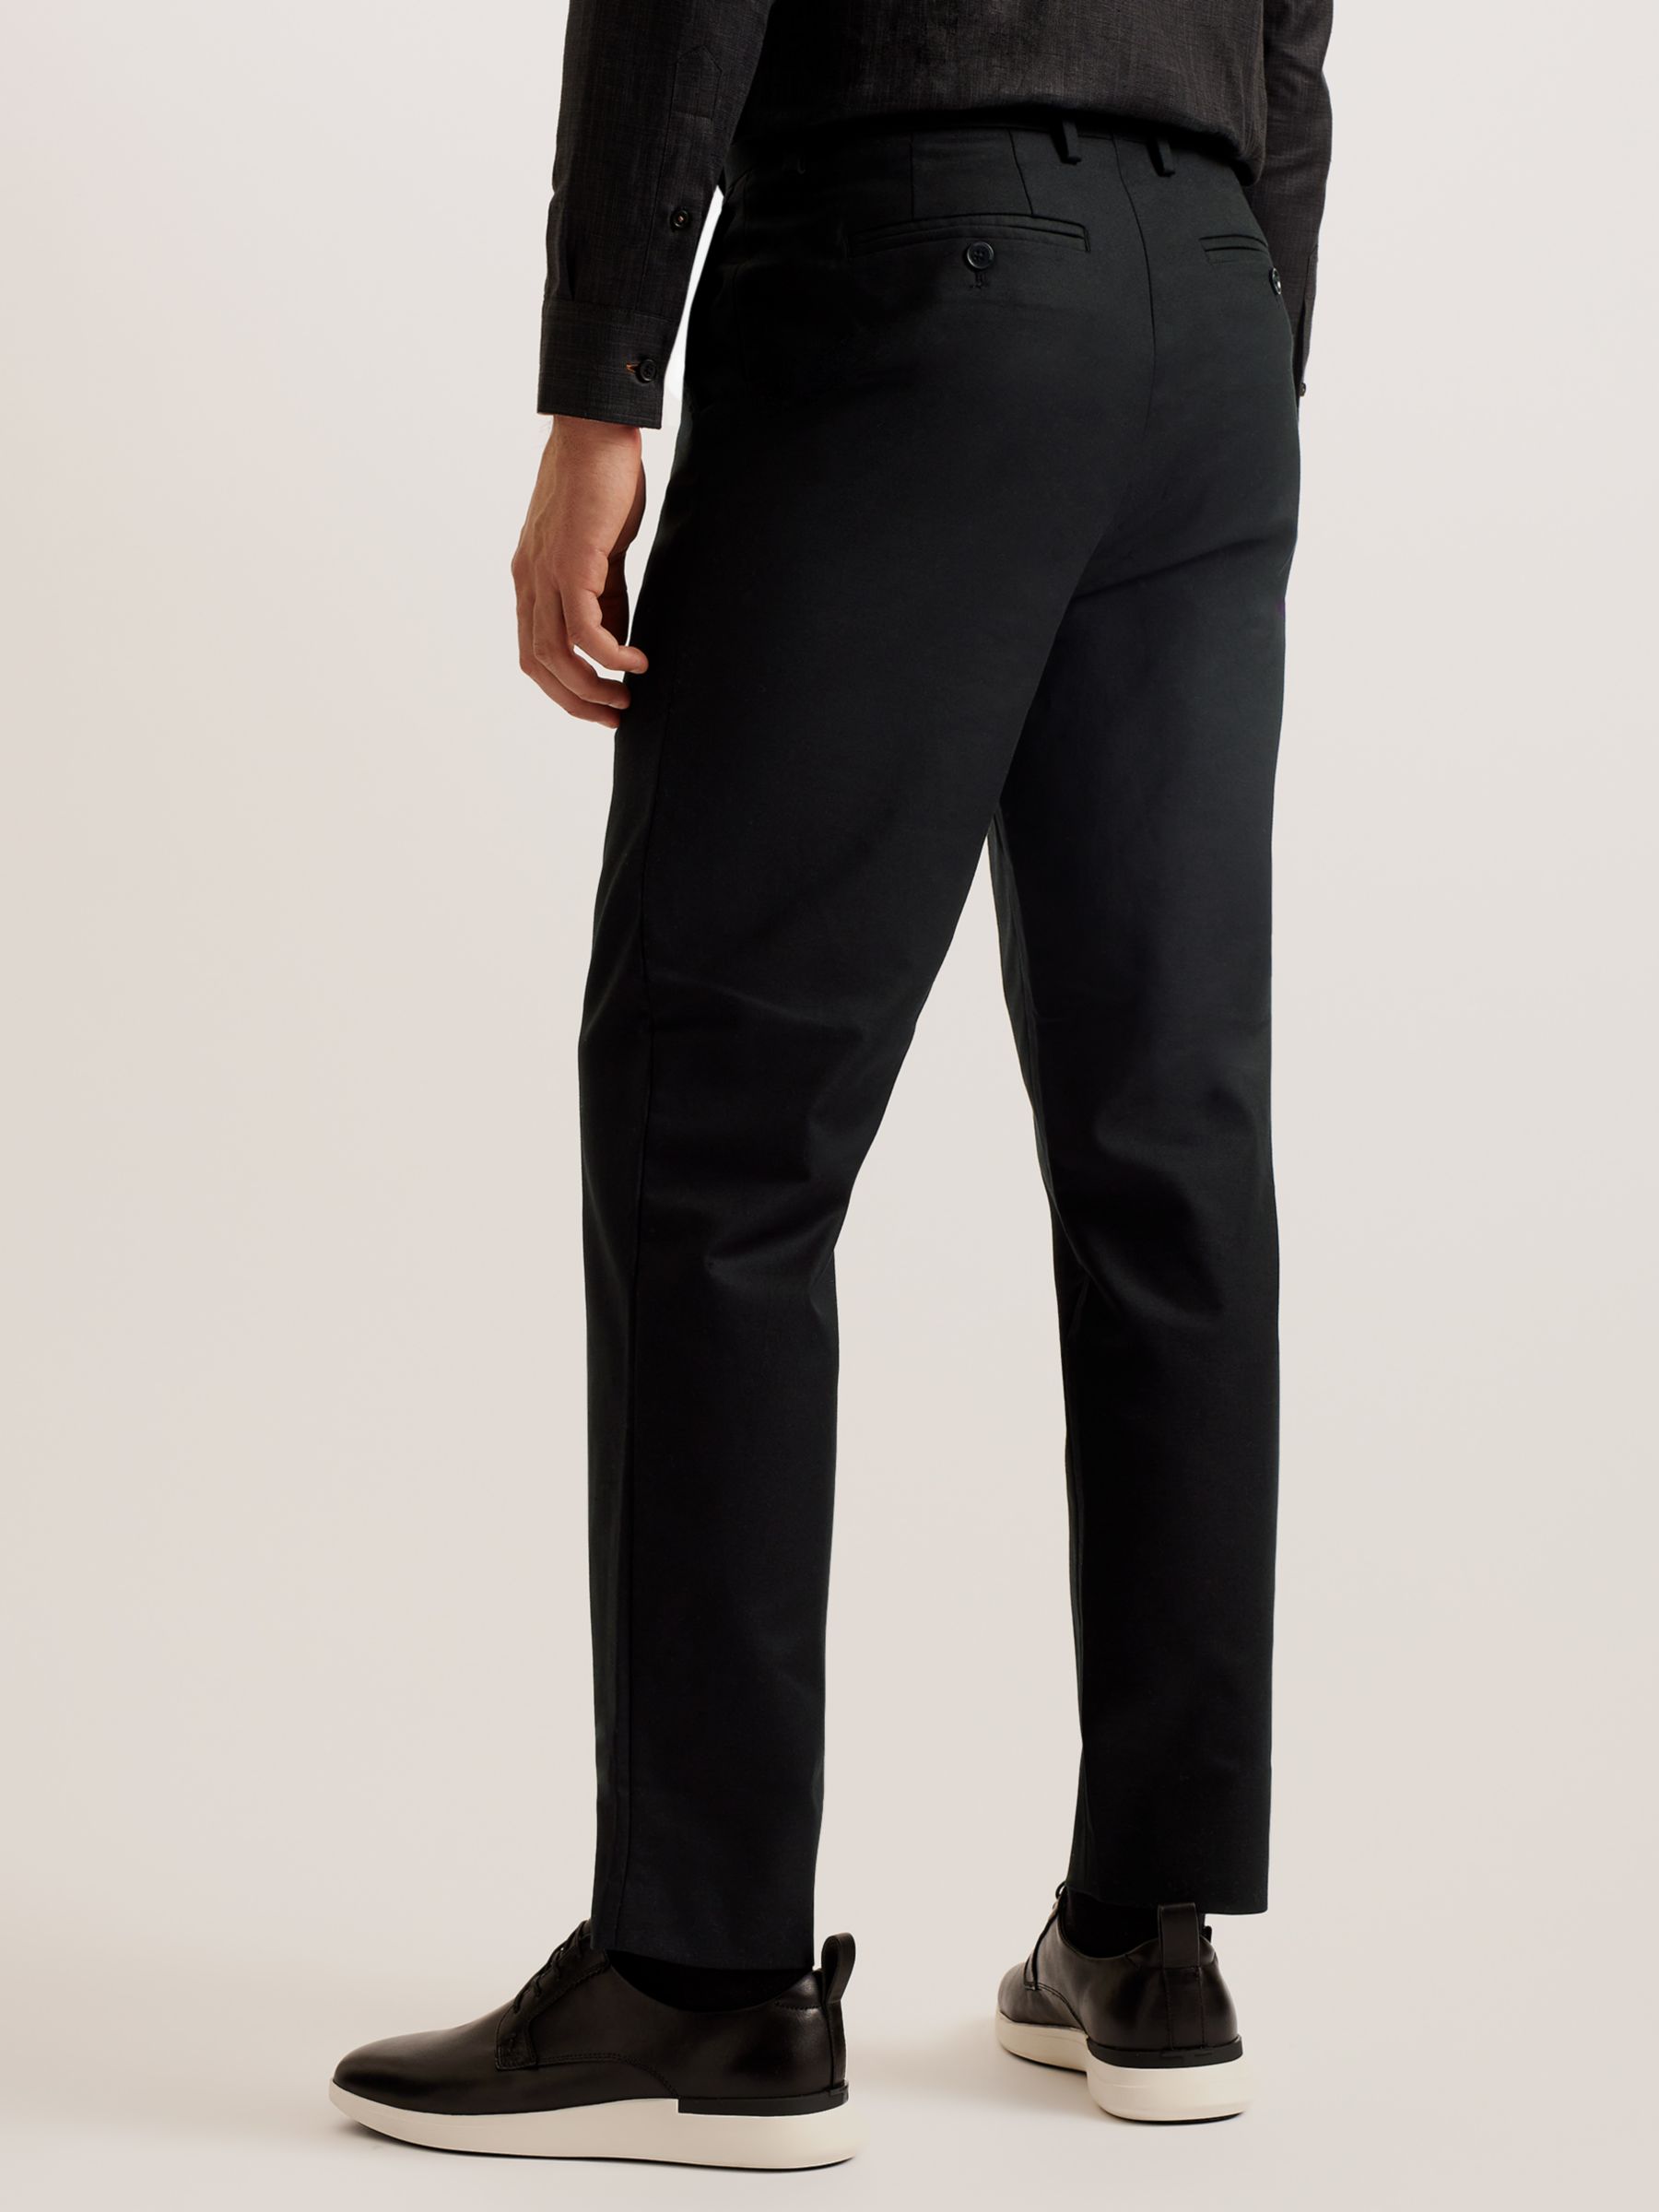 Ted Baker Felixt Slim Fit Cotton Tailored Trousers, Black, Black, 28R